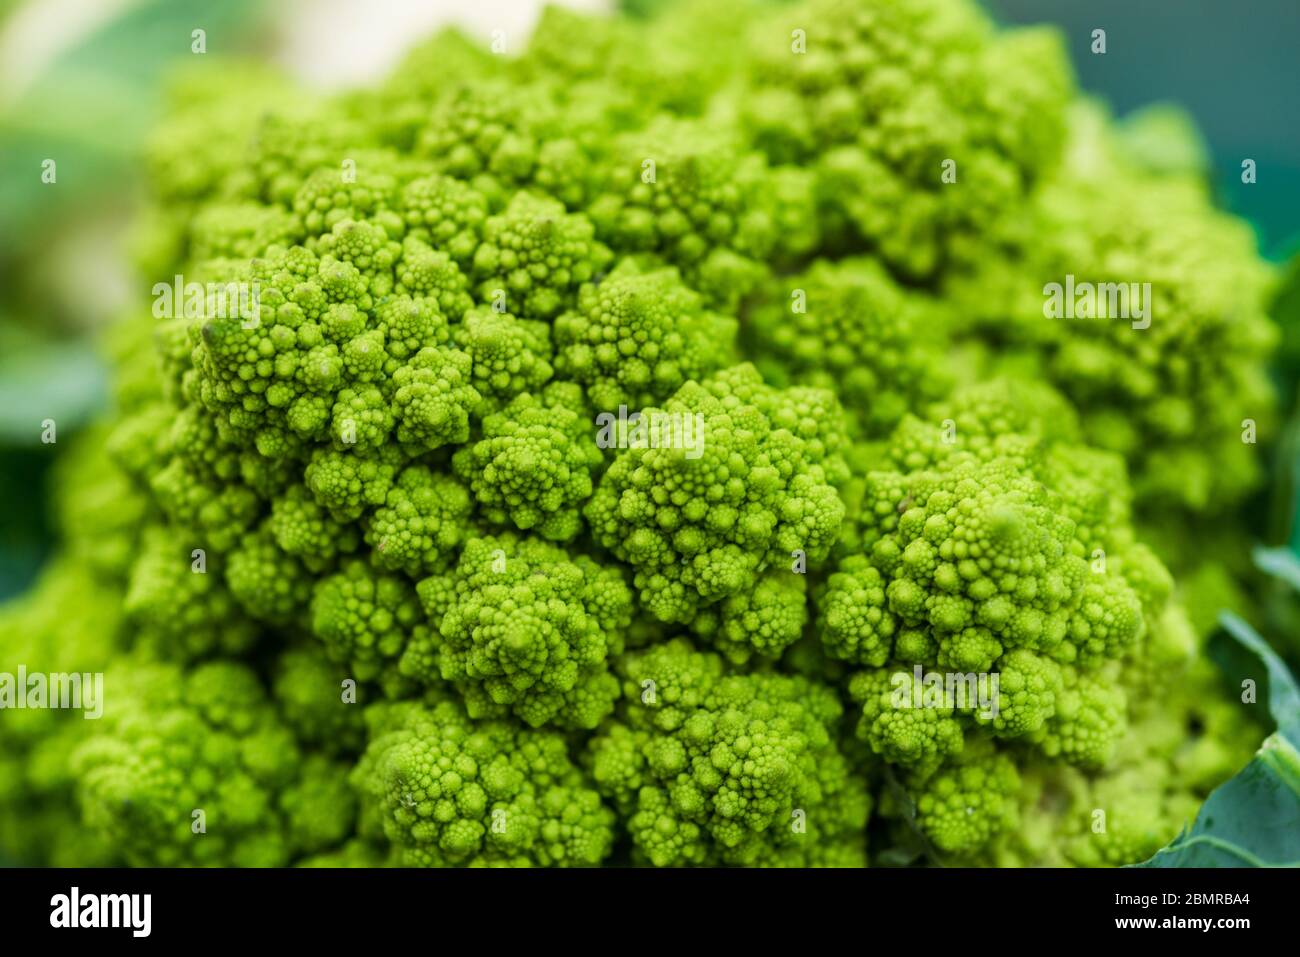 Macro food photo of organic romanesco broccoli at the farmers market stall. Stock Photo